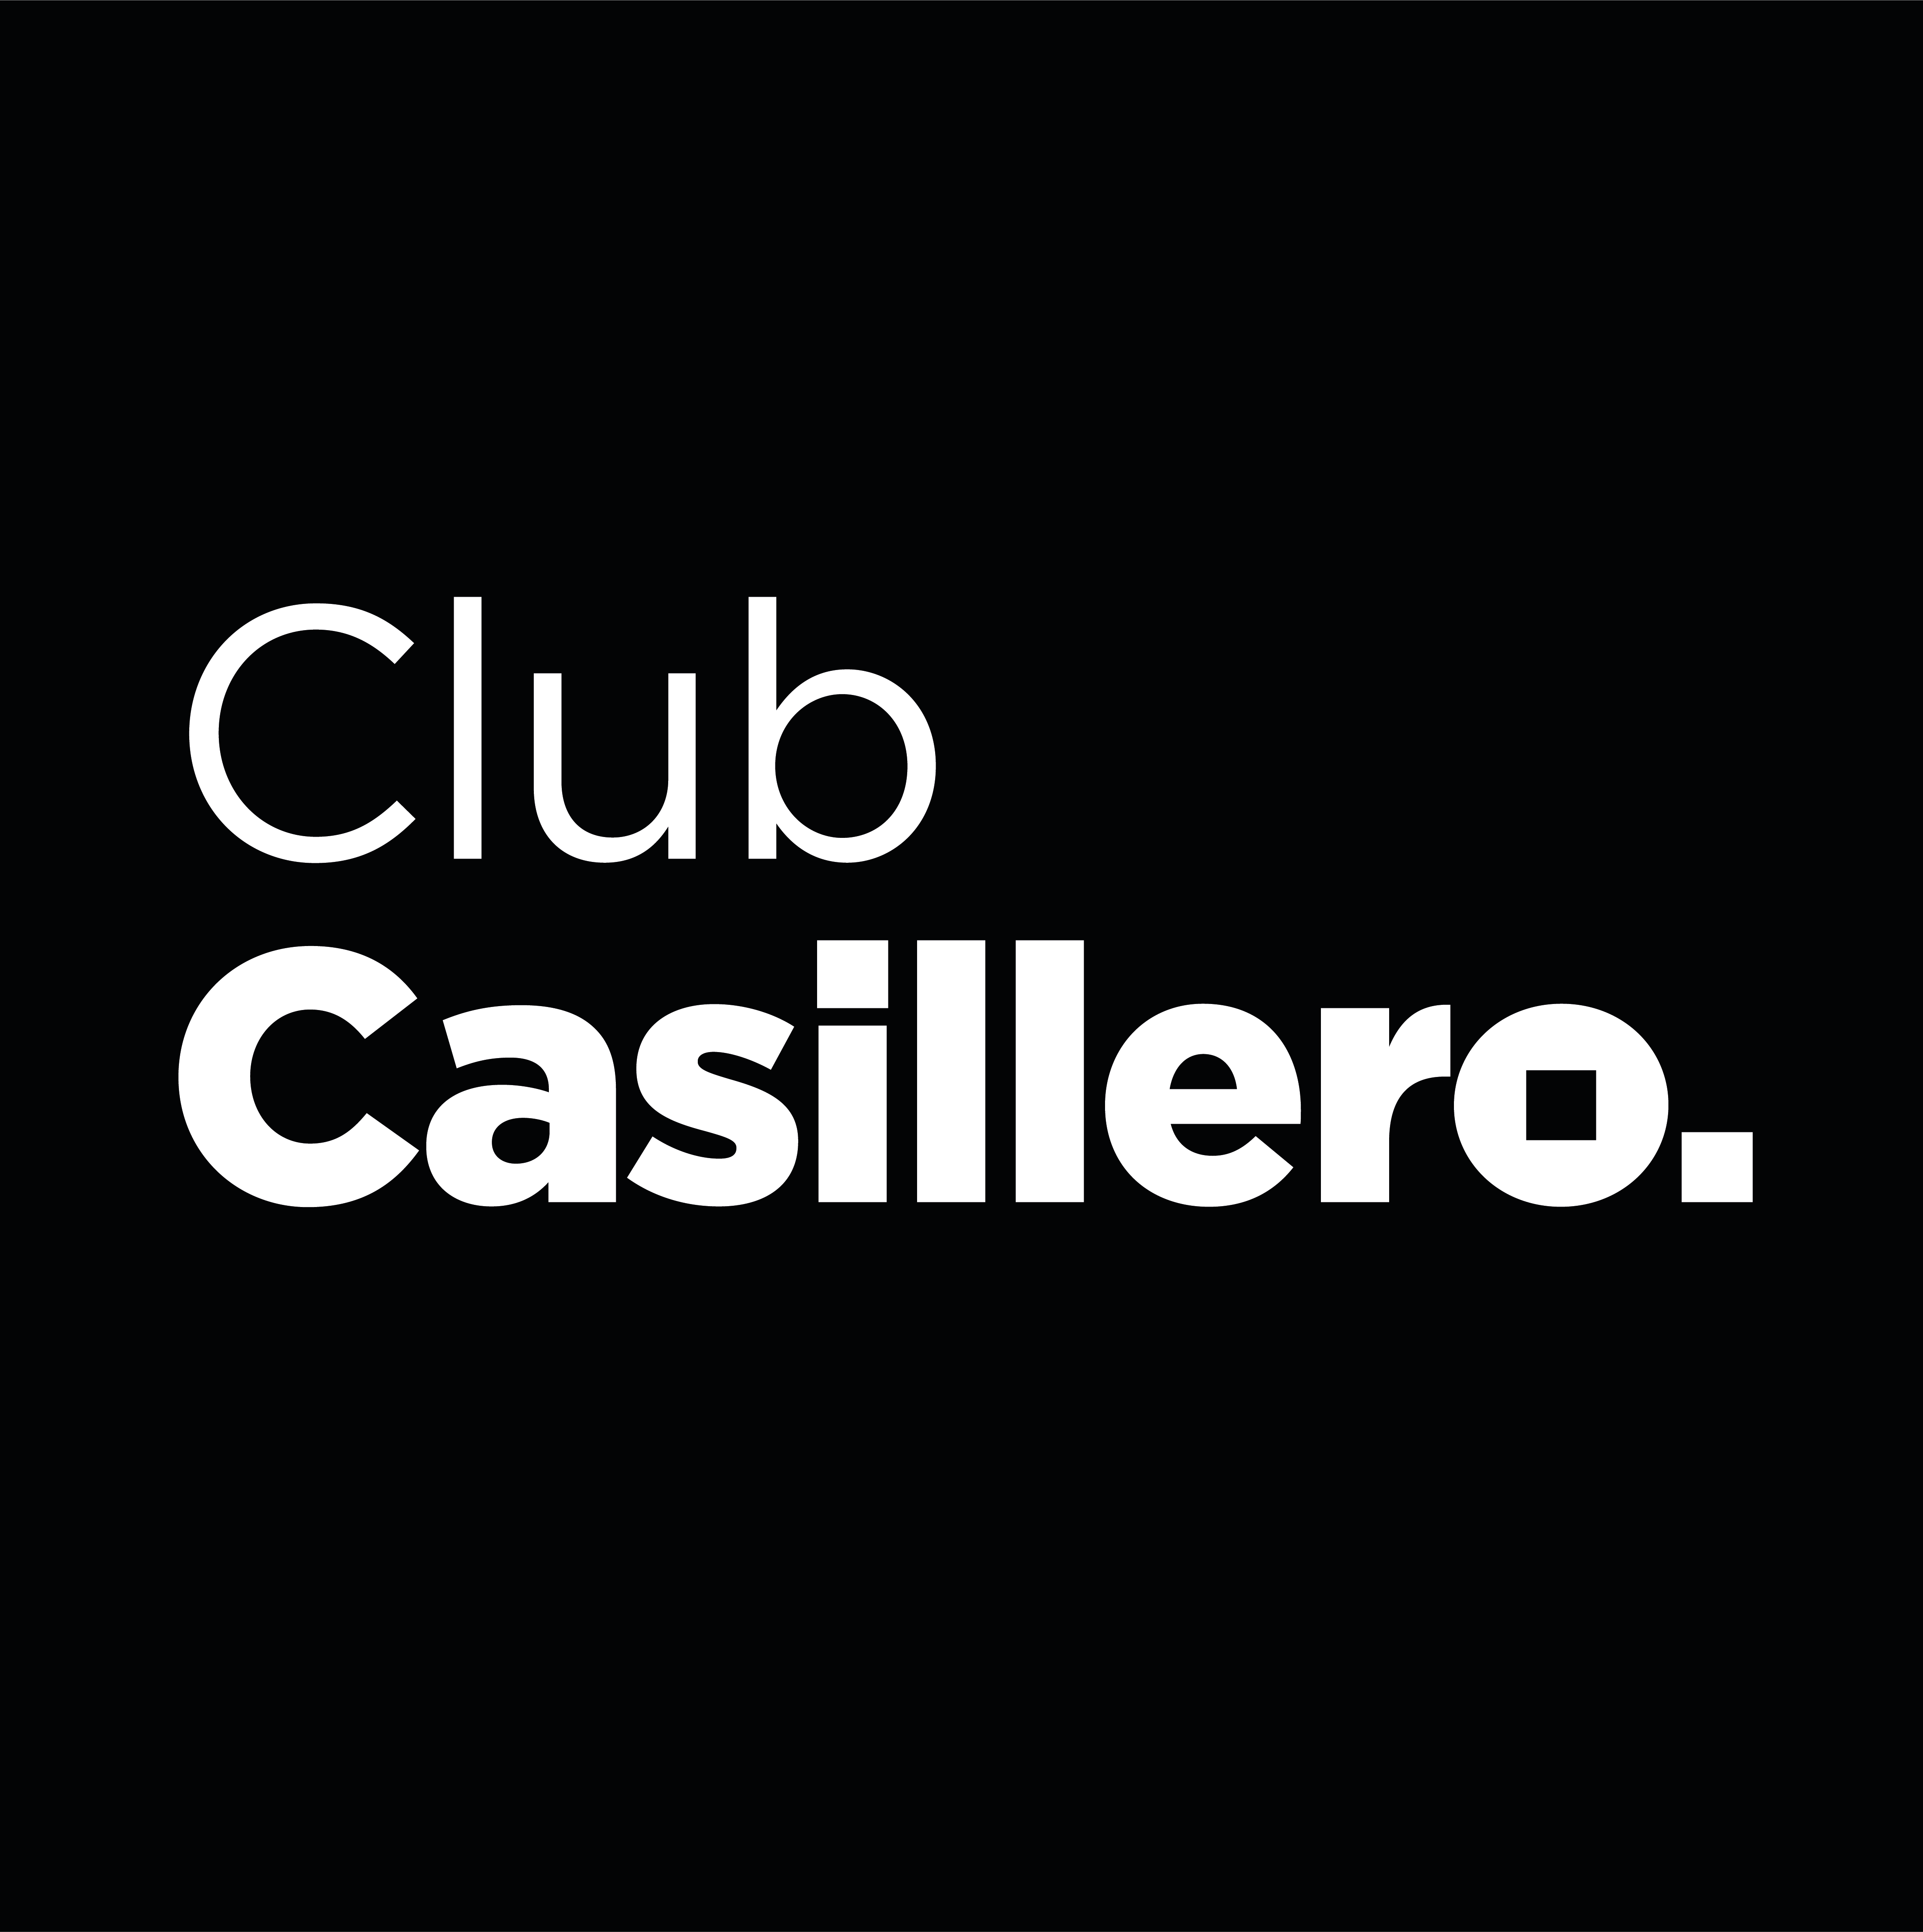 Club casillero